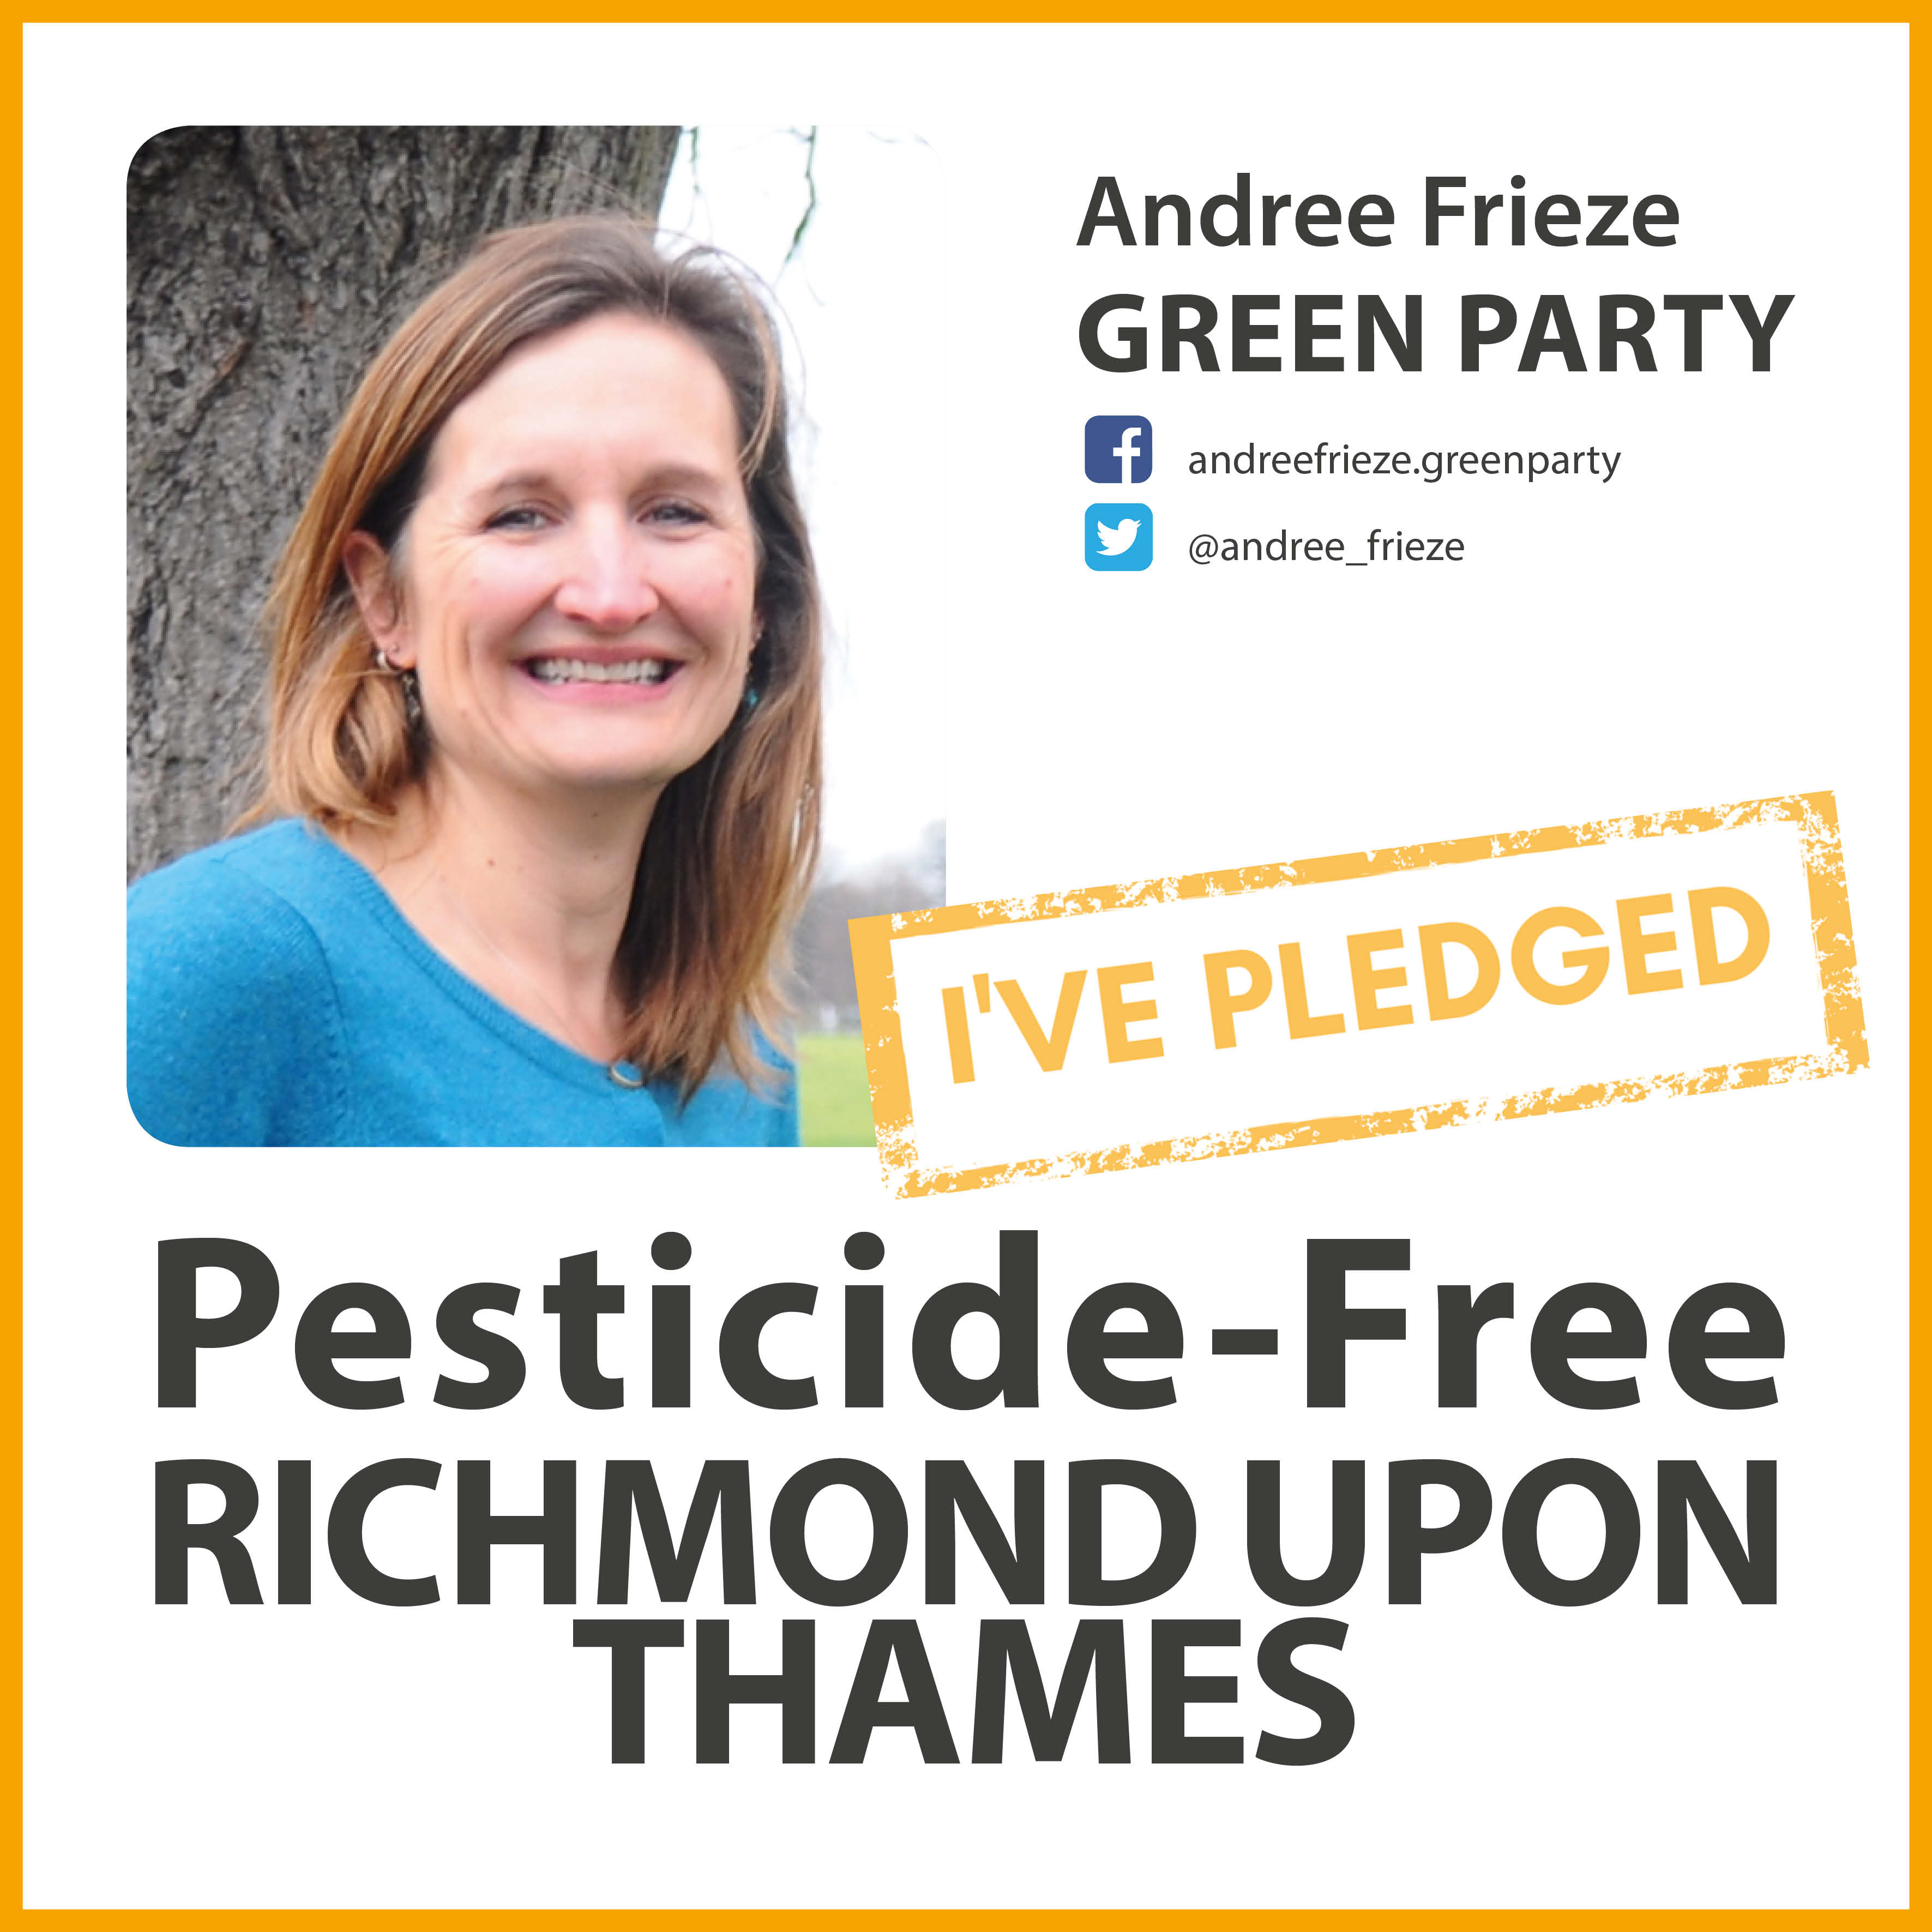 Andree Frieze has pledged to make Richmond pesticide-free